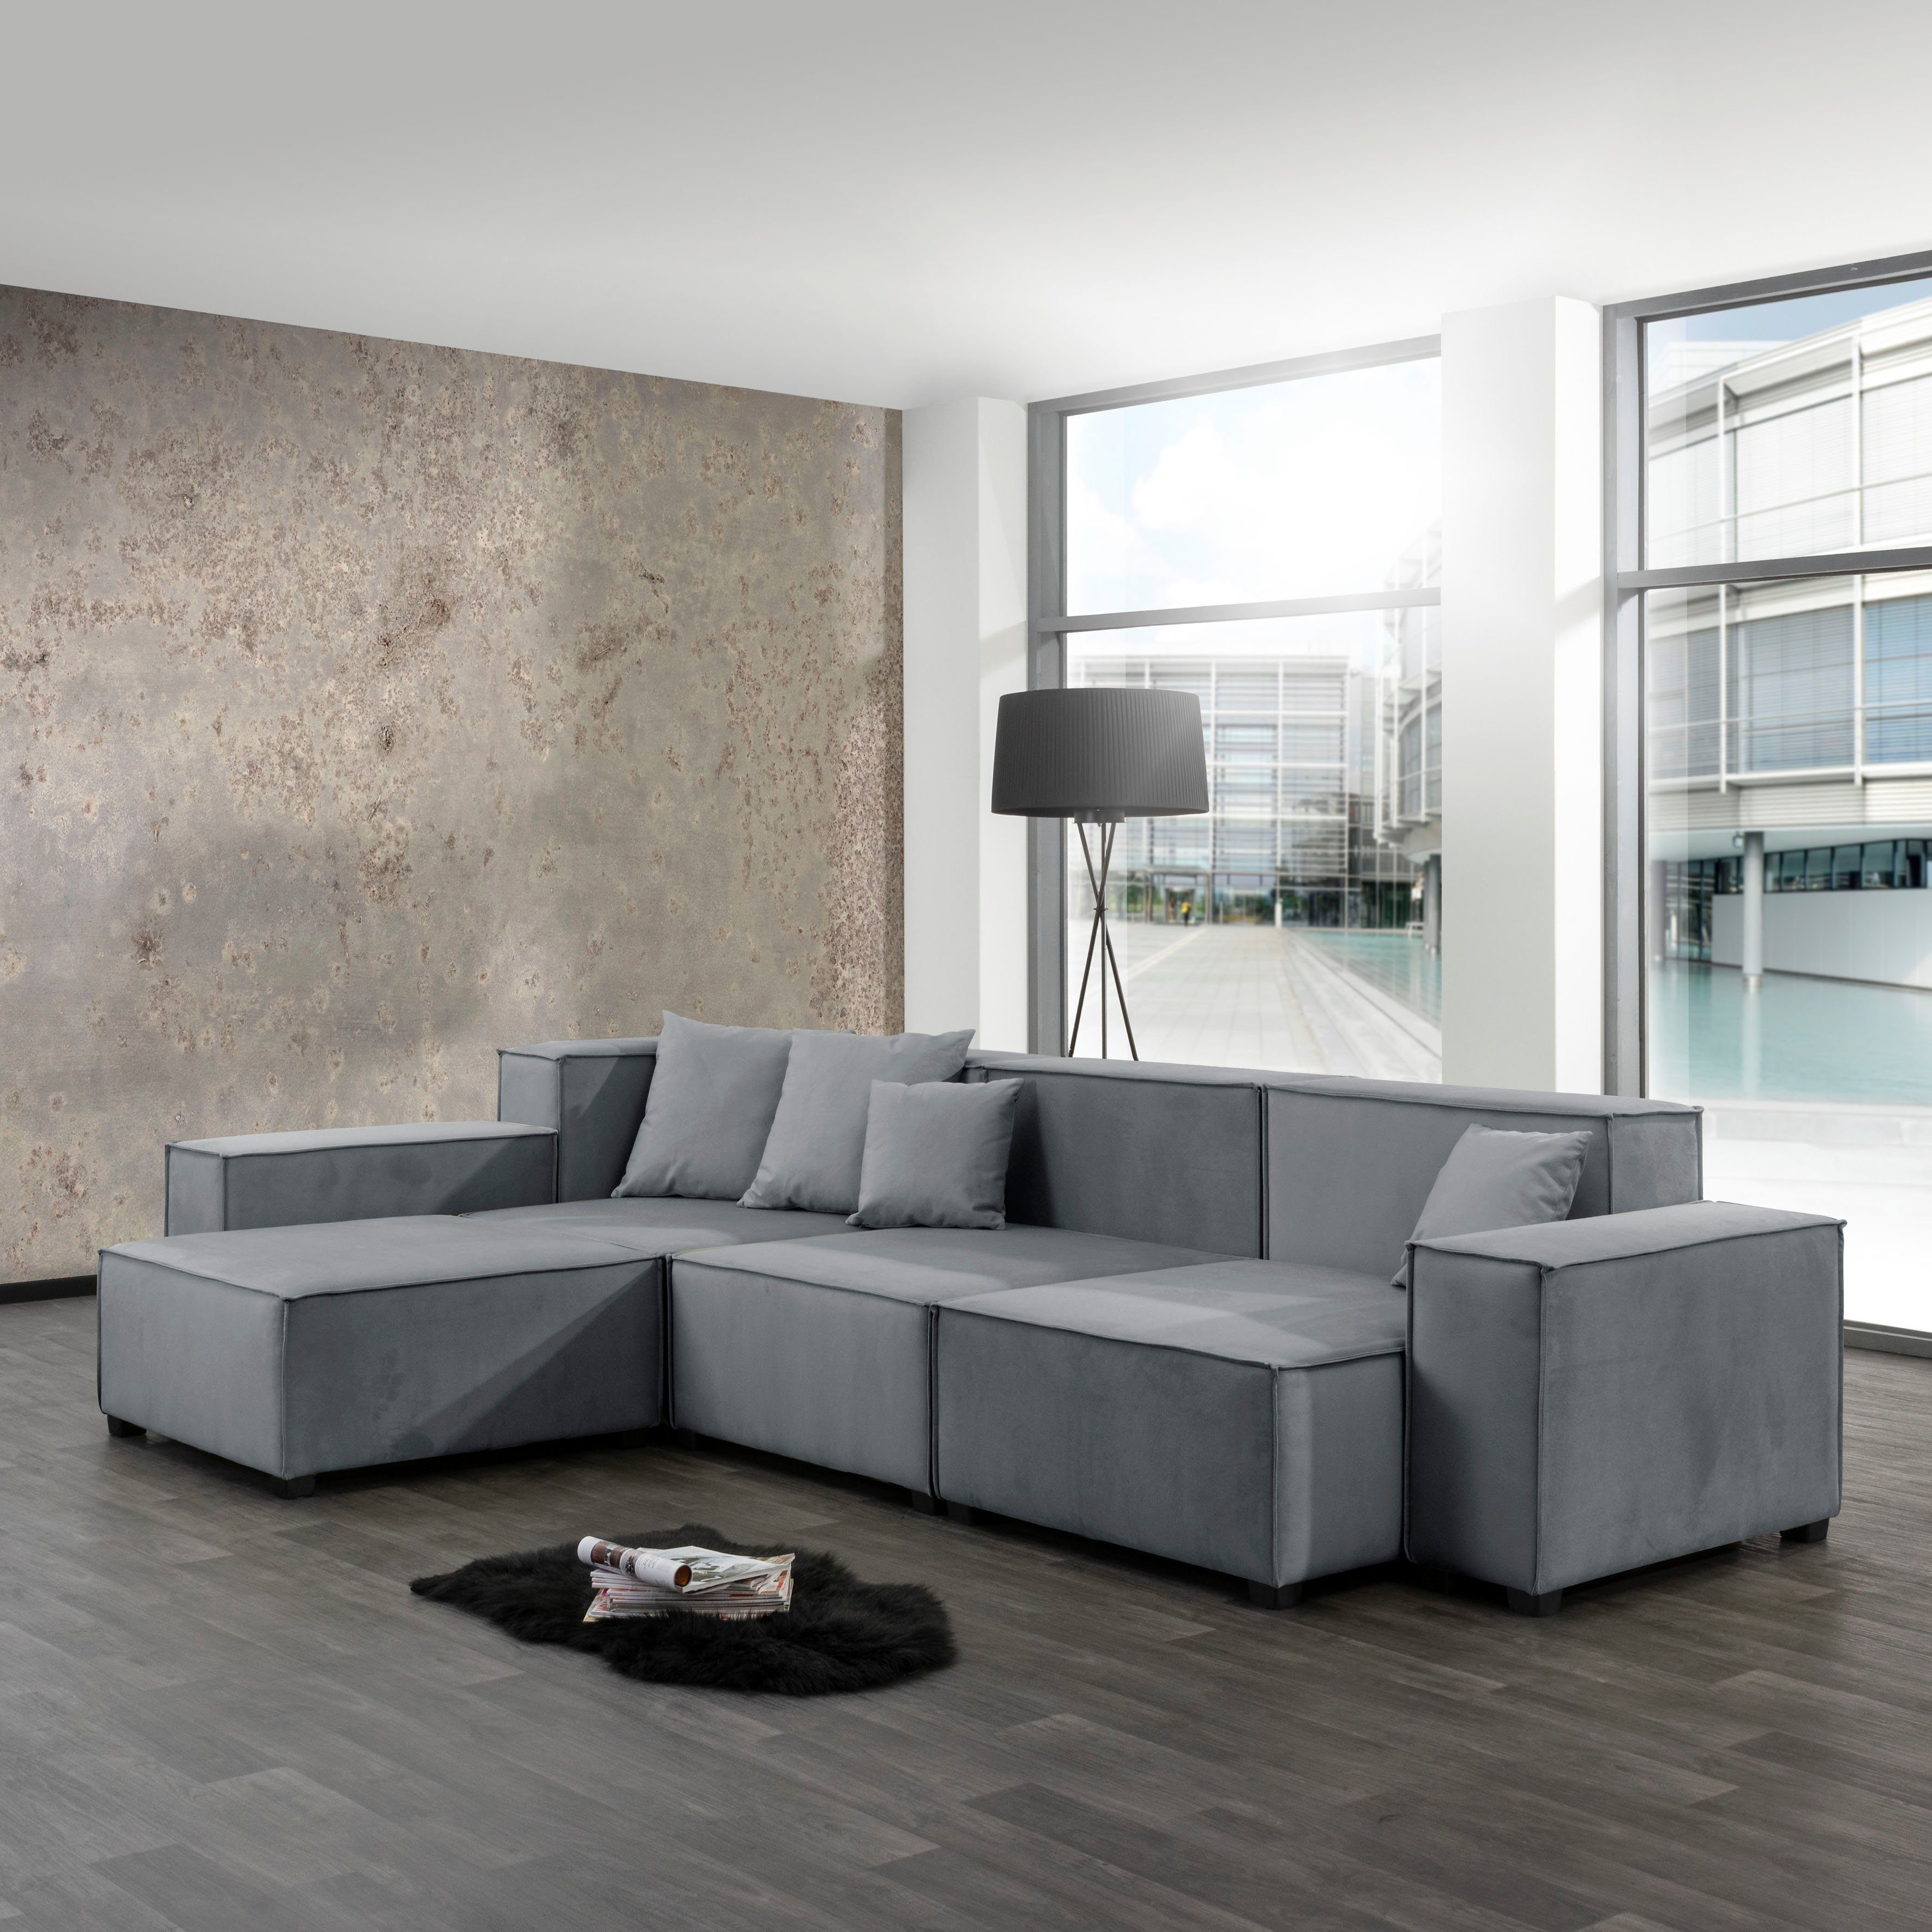 Max Winzer® Wohnlandschaft MOVE, Set, Sofa-Set 04 aus 10 Sitzelementen, inklusive 4 Zierkissen, kombinierbar